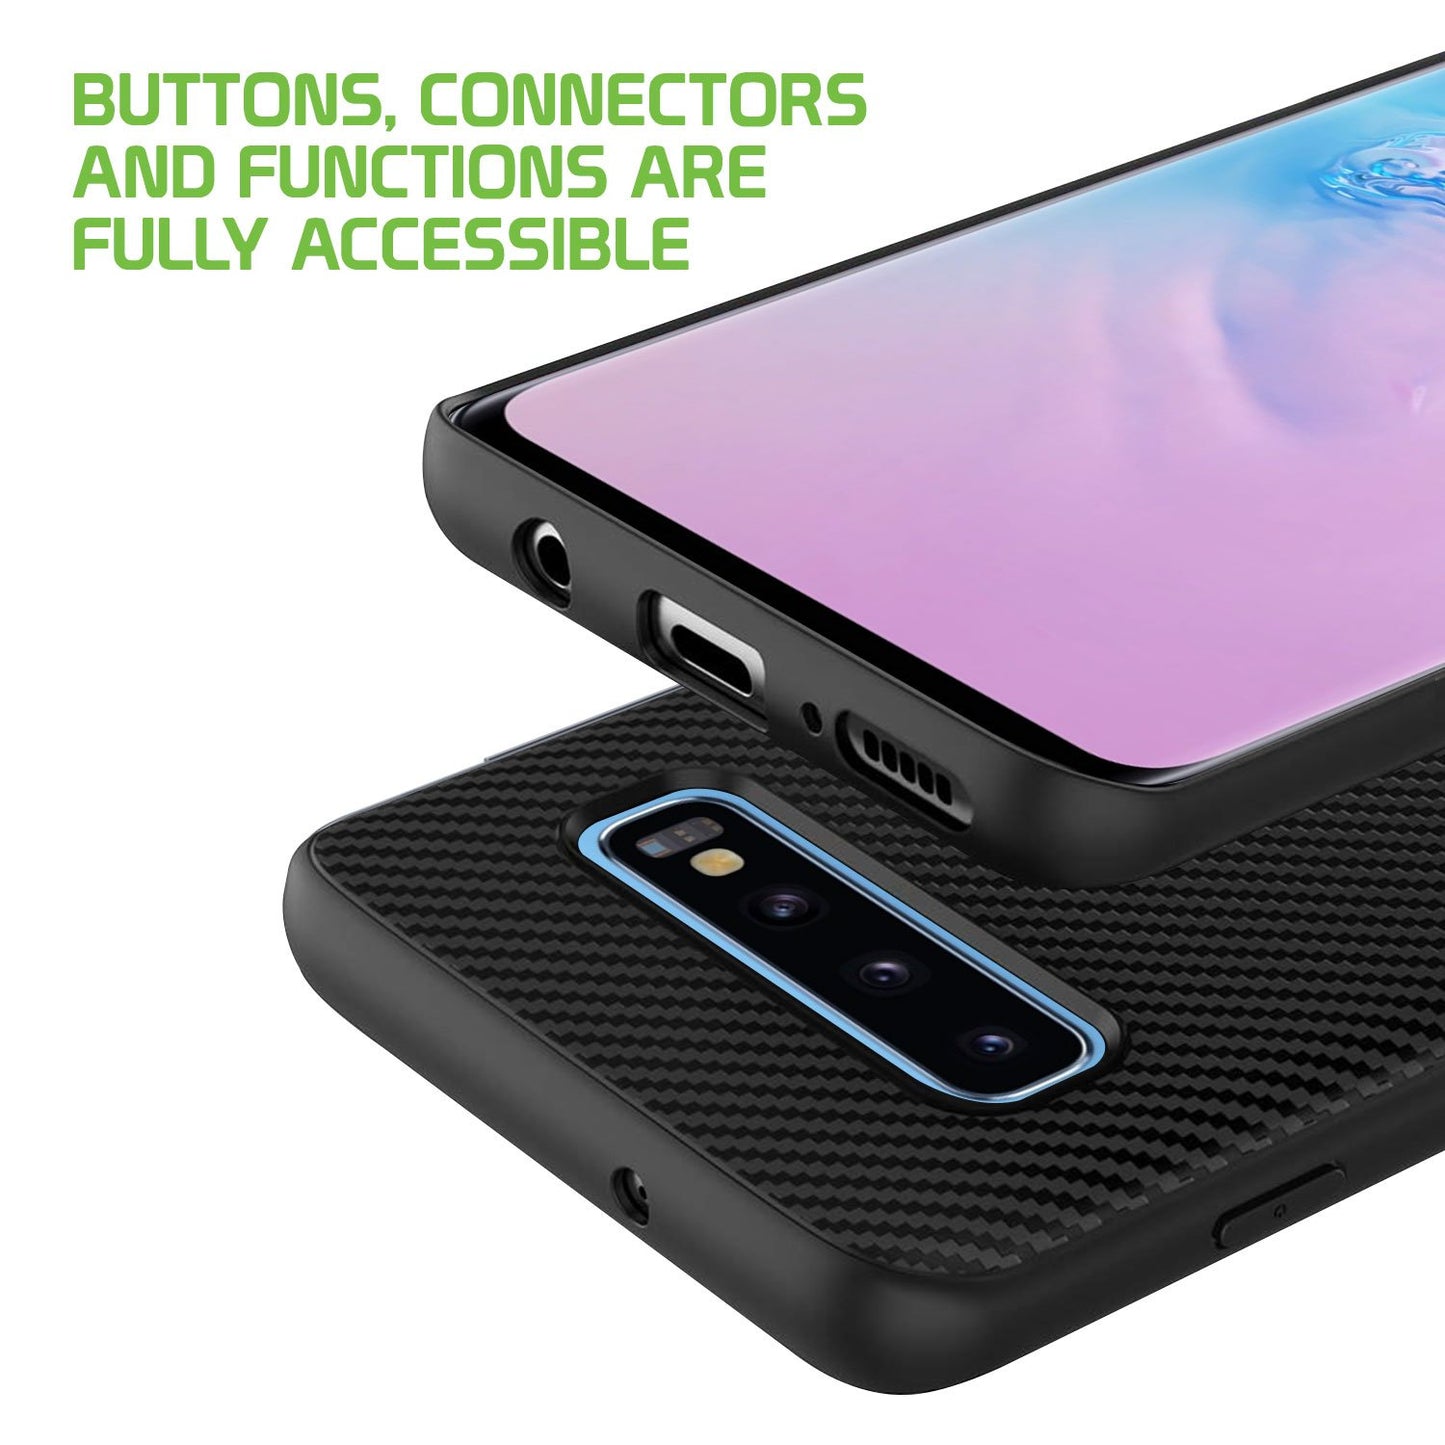 CCSAMS10EBBK - Samsung Galaxy S10e Heavy Duty Slim Case Protector Cover - Black